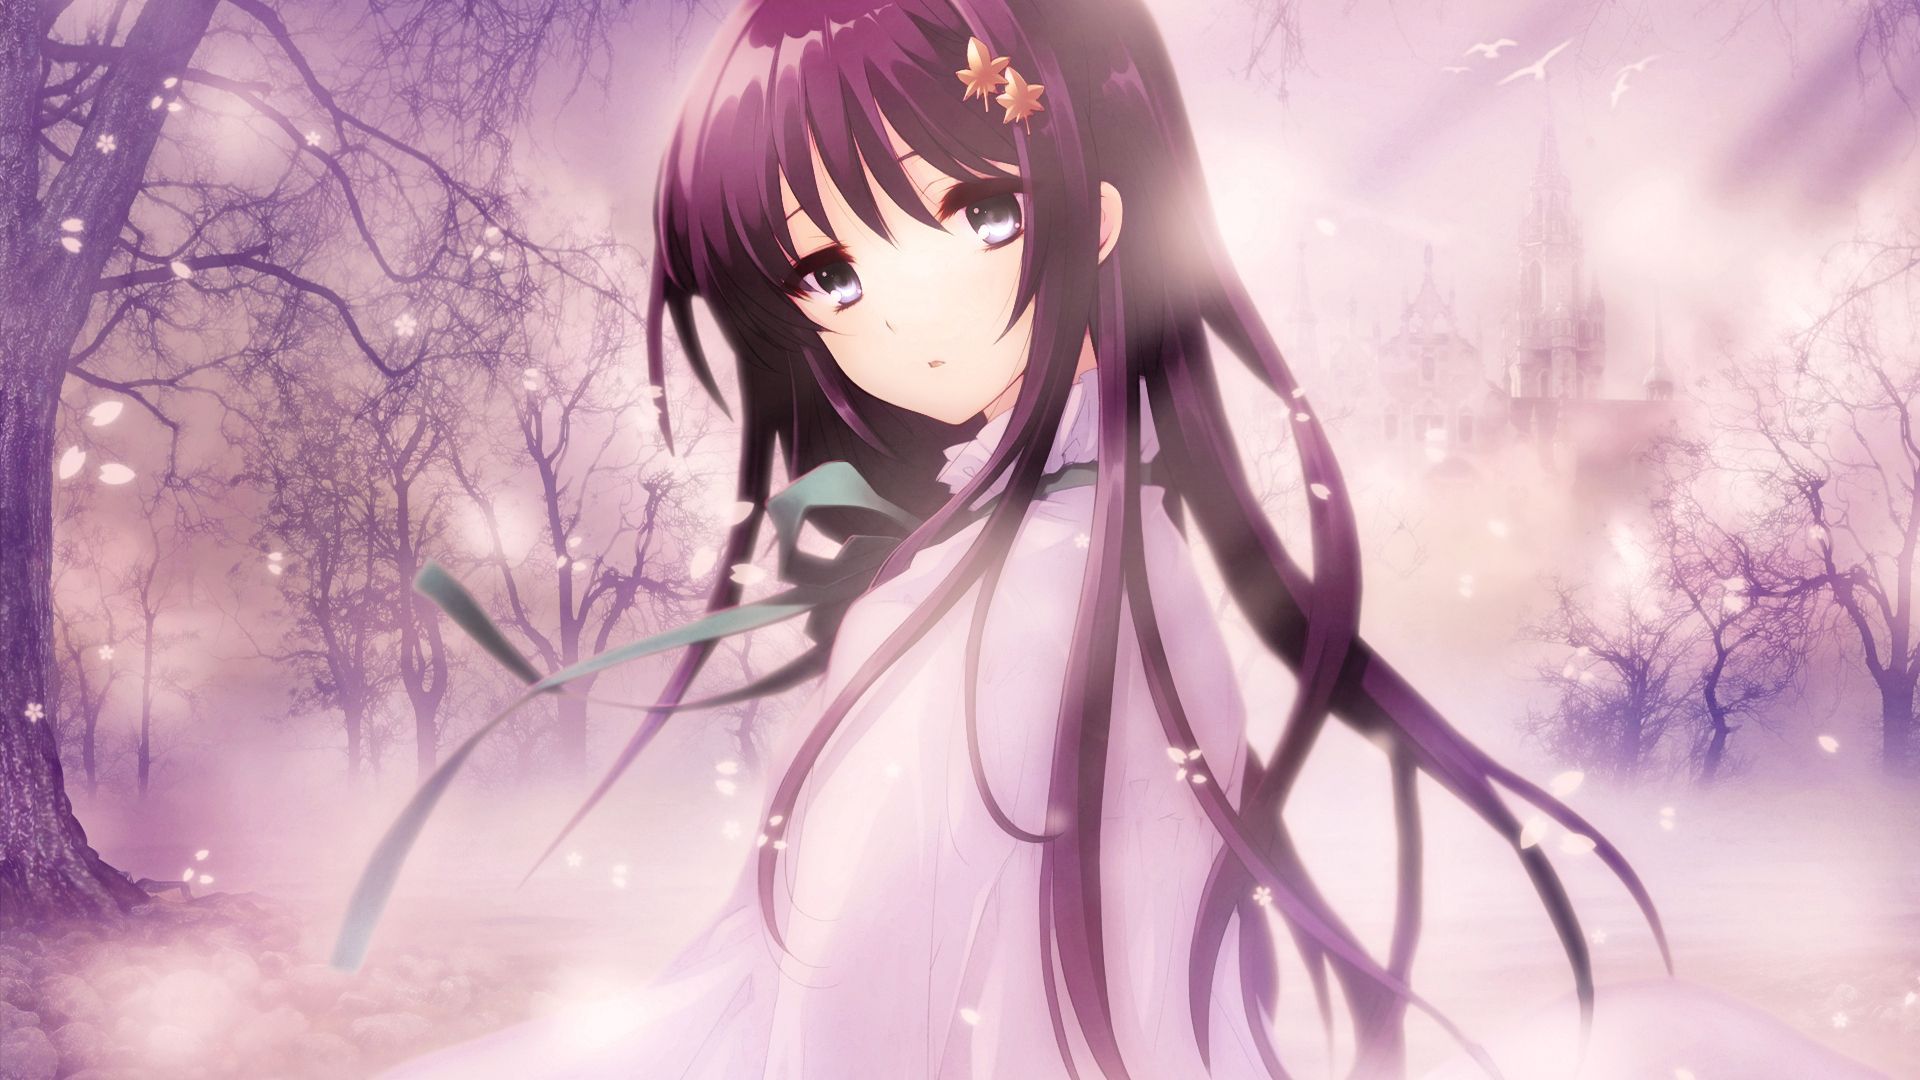 HD Beautiful Anime Girl 4k Wallpaper for Mobile